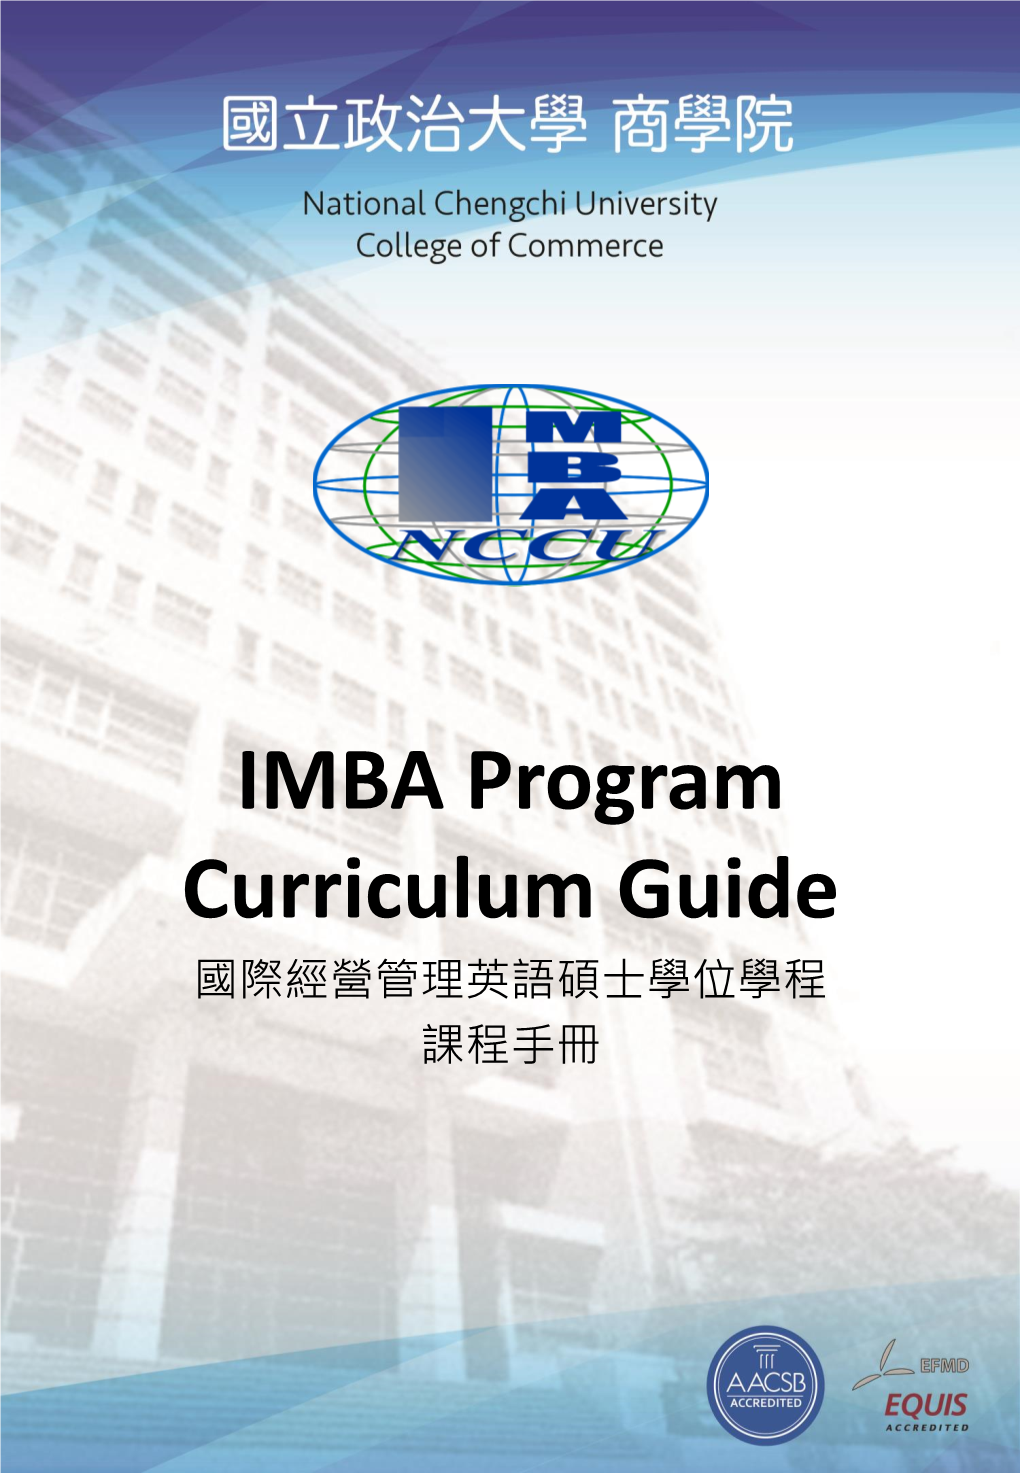 IMBA Program Curriculum Guide